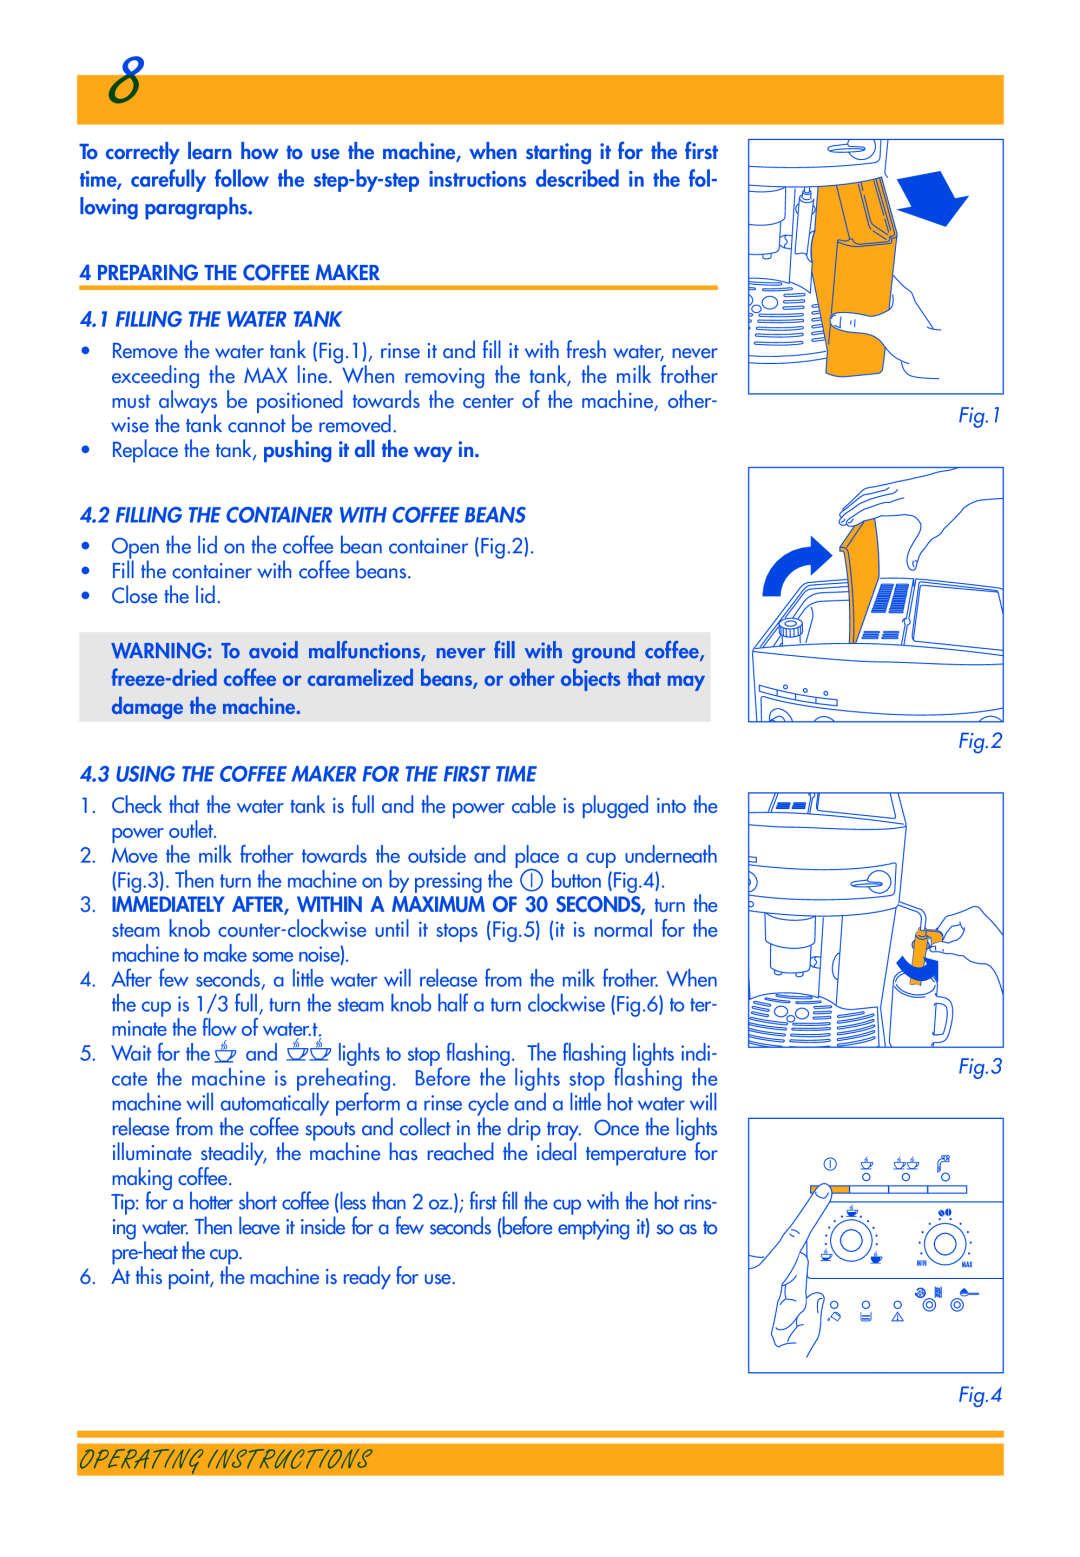 DeLonghi ESAM3300 manual Operating Instructions, Preparing The Coffee Maker, Filling The Water Tank 